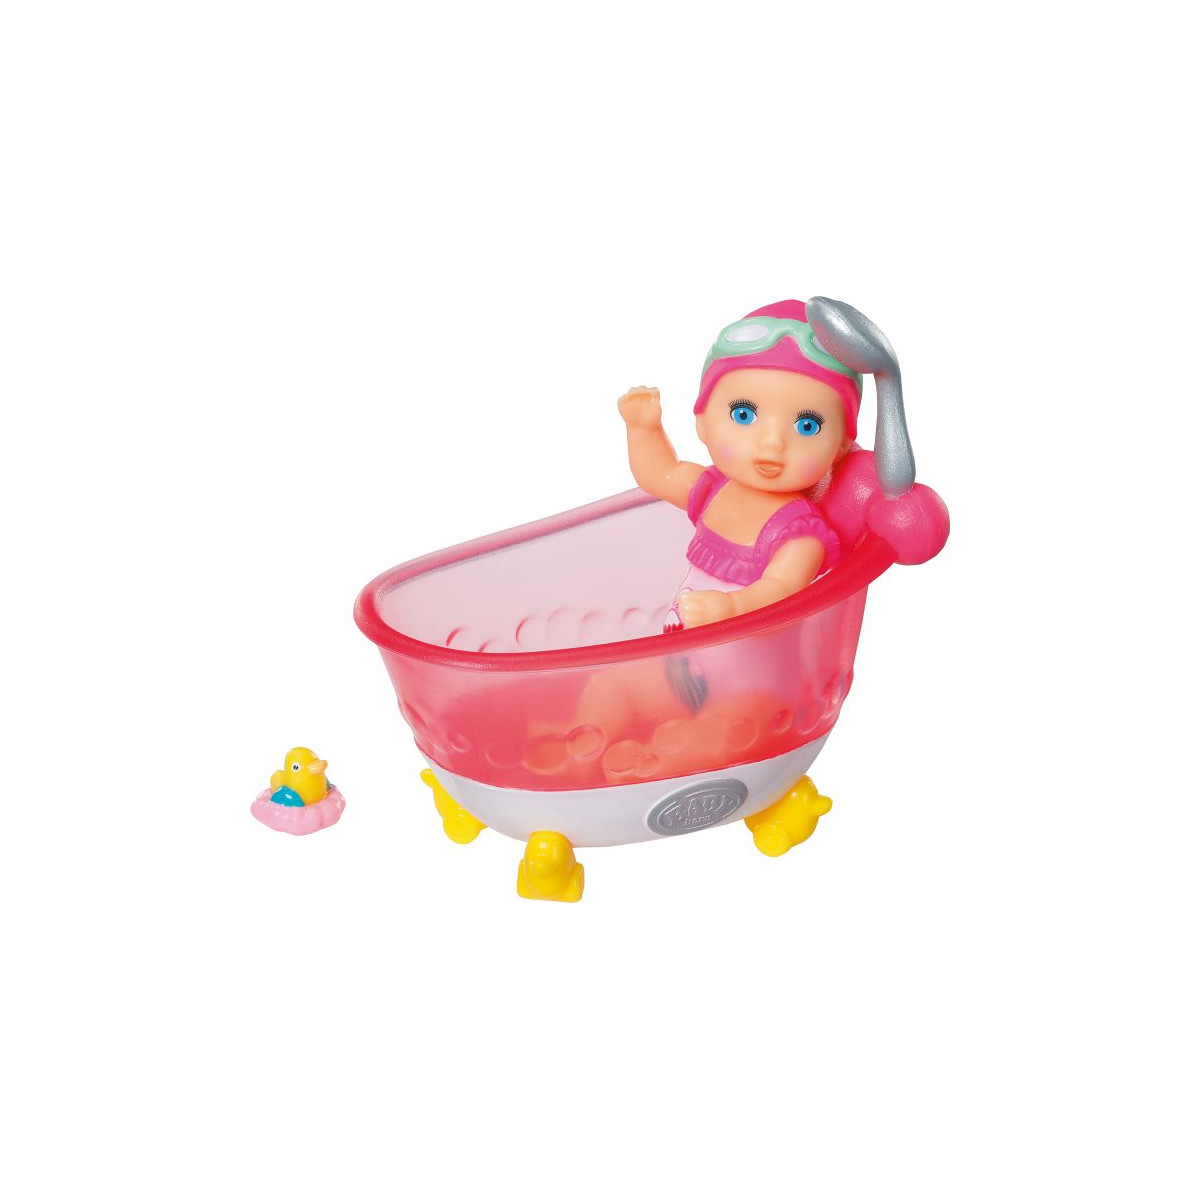 BABY born Minis - Playset Bathtub